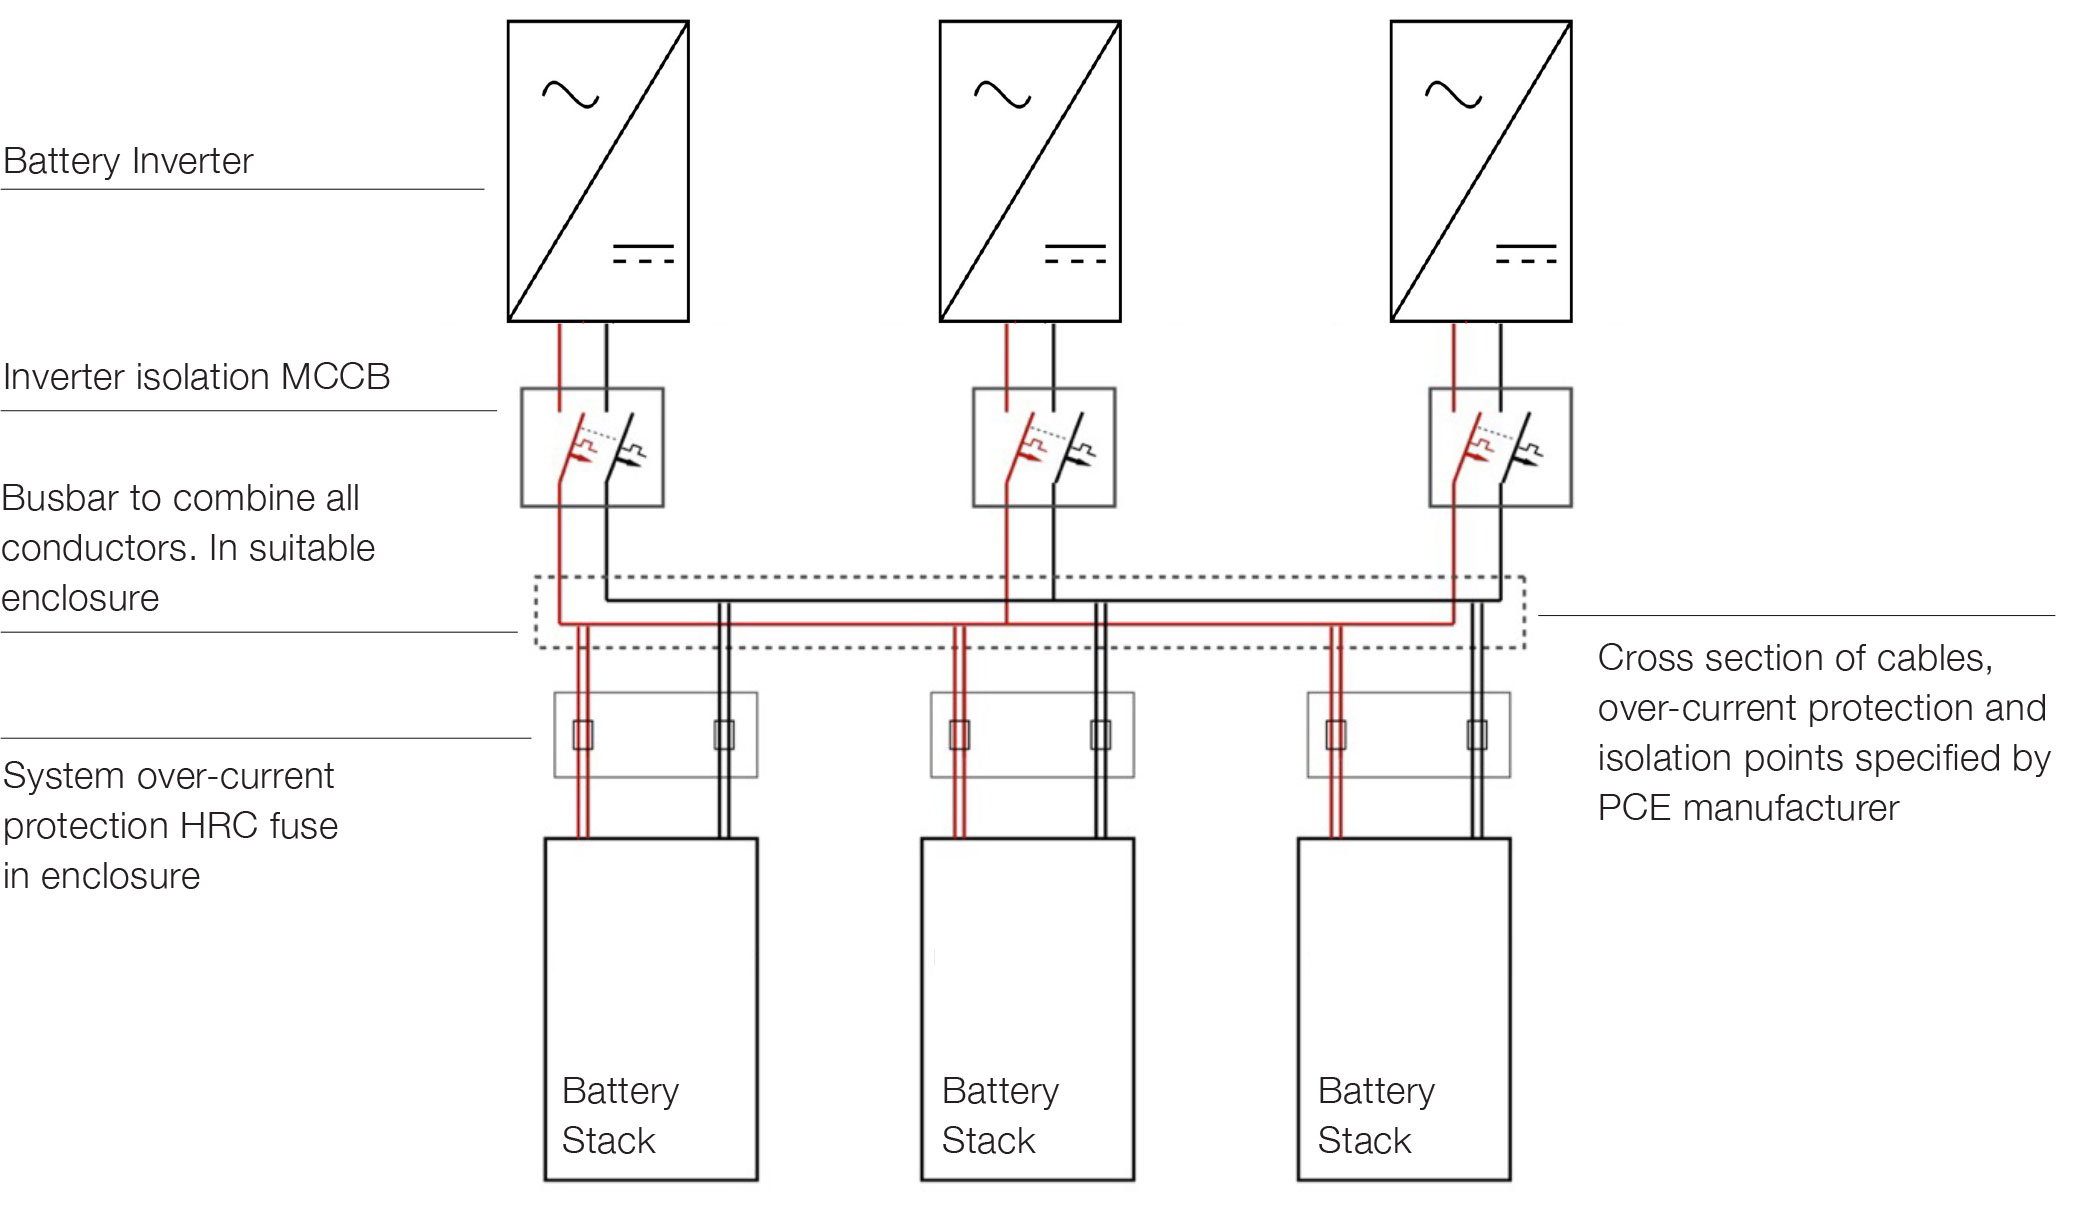 Parallel battery cabinets in multiphase inverter arrangements